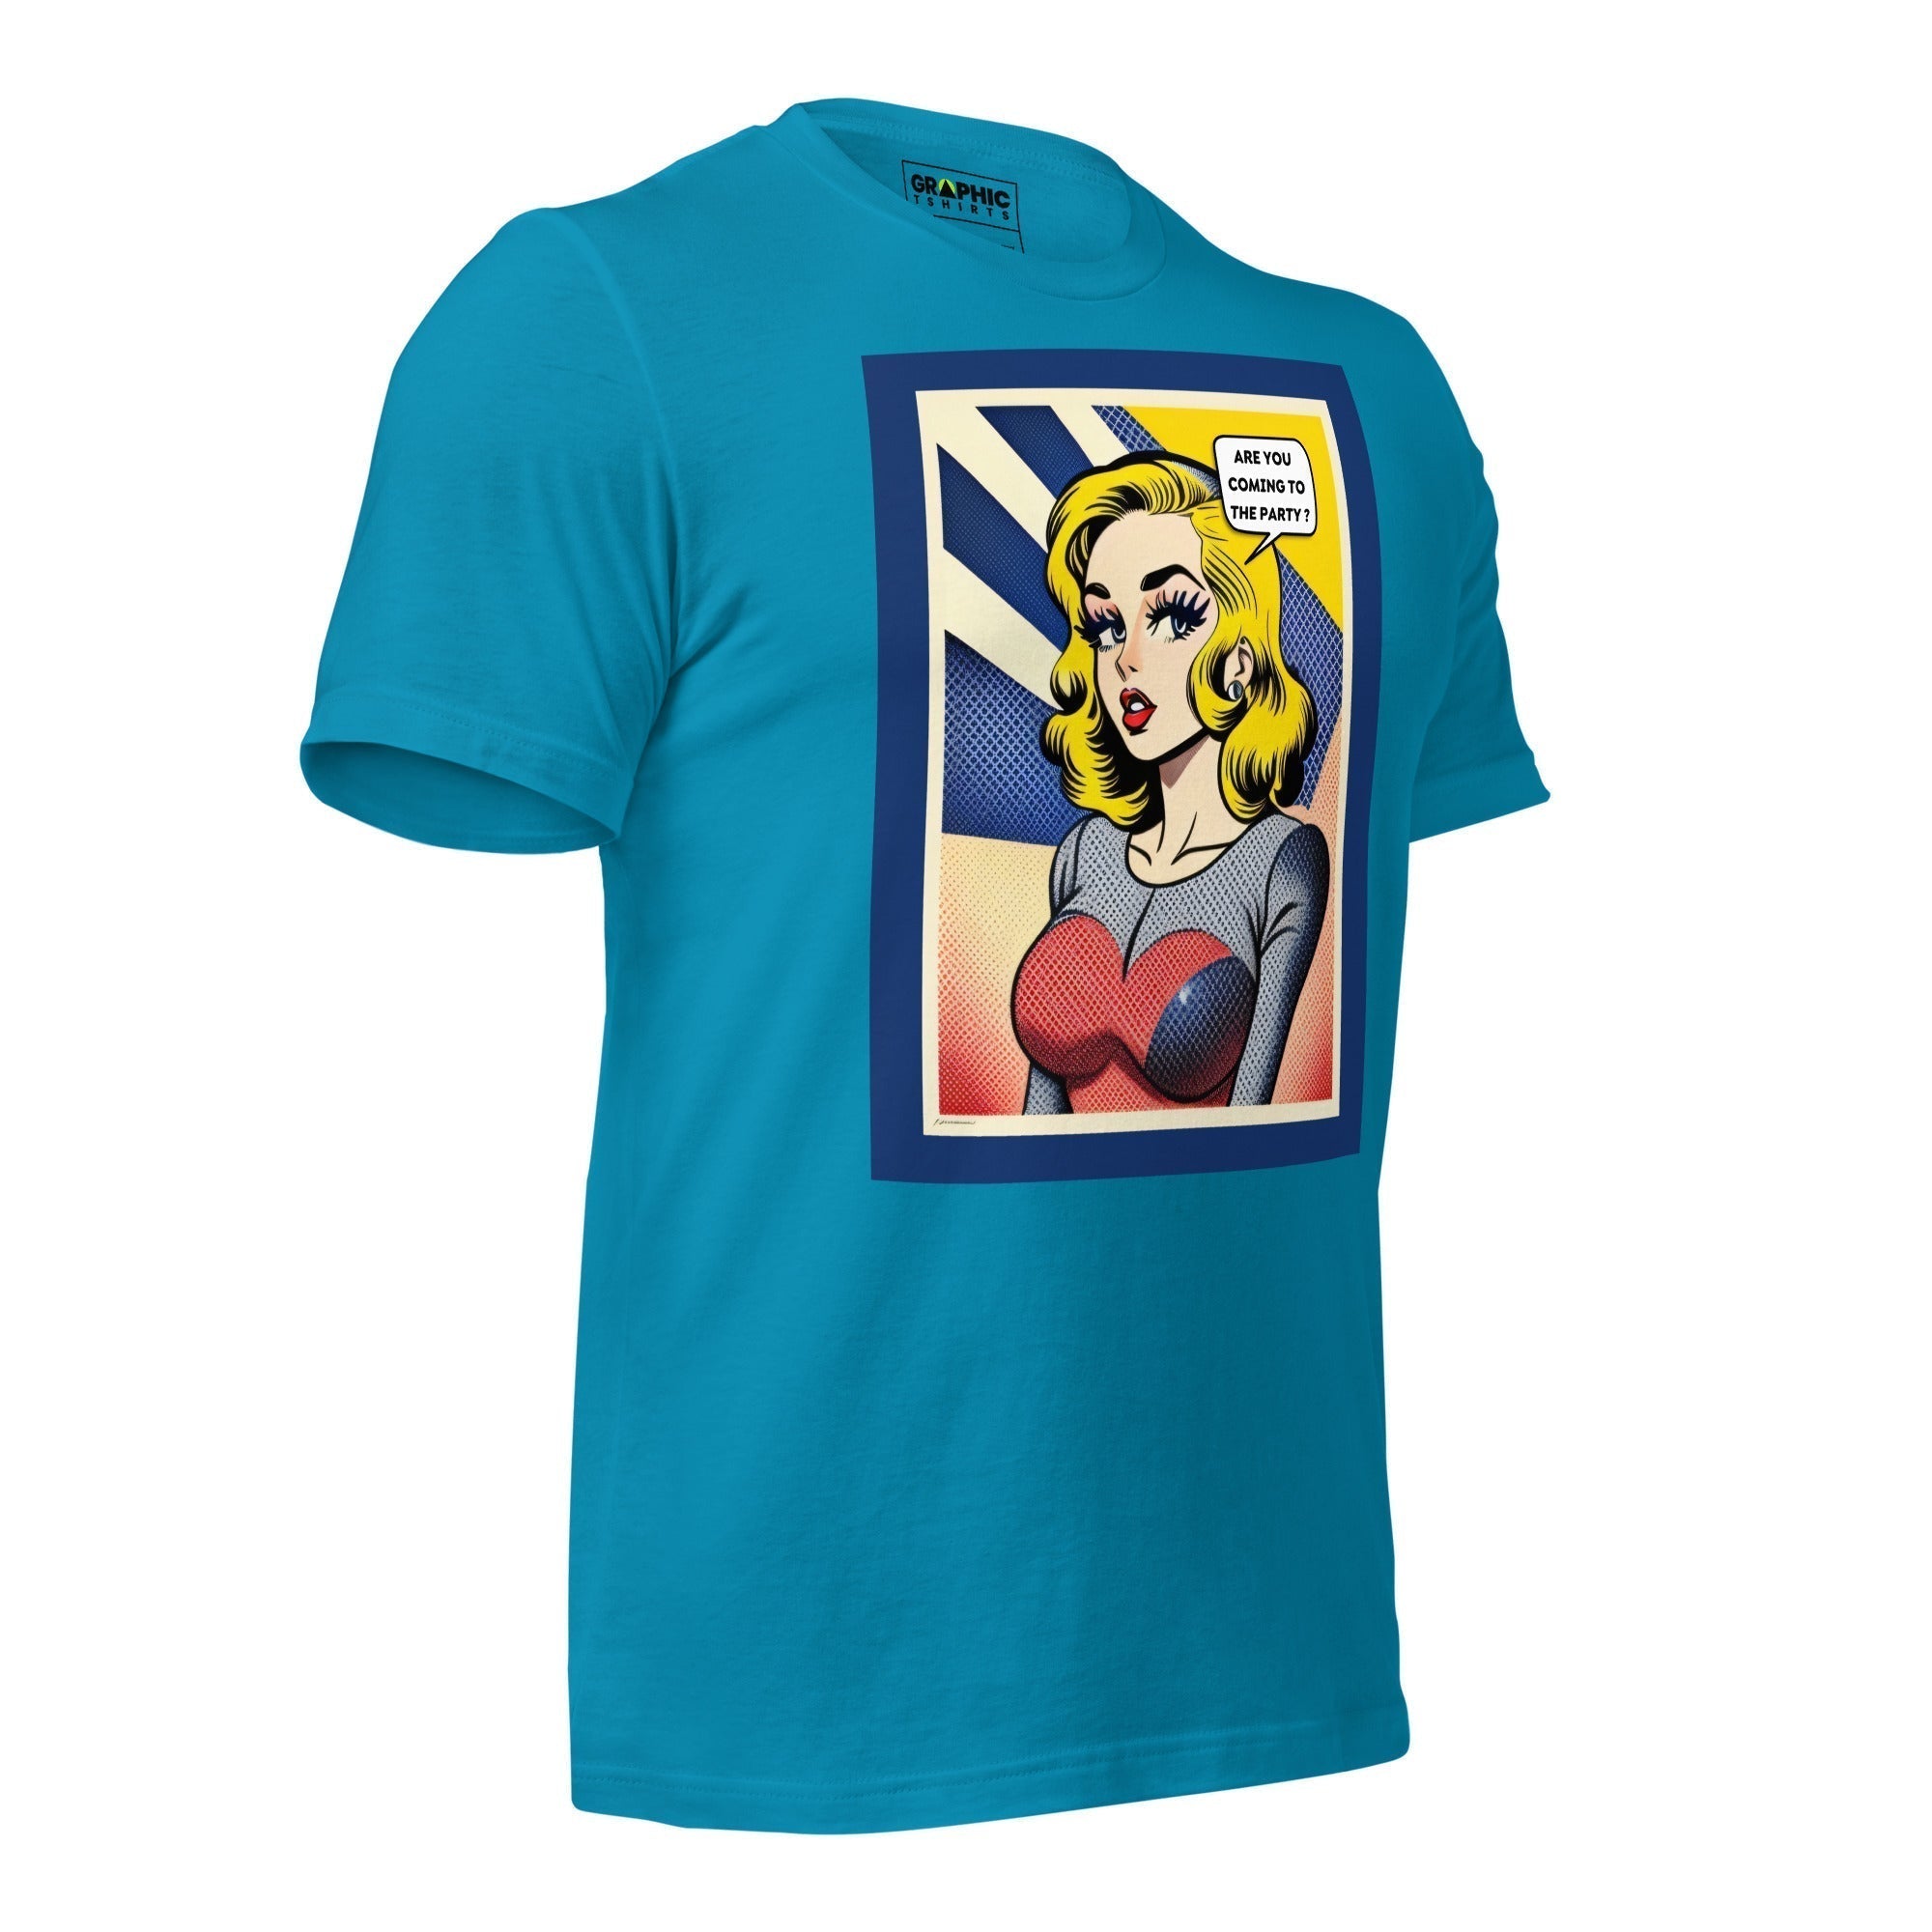 Unisex Crew Neck T-Shirt - Vintage American Comic Series v.48 - GRAPHIC T-SHIRTS